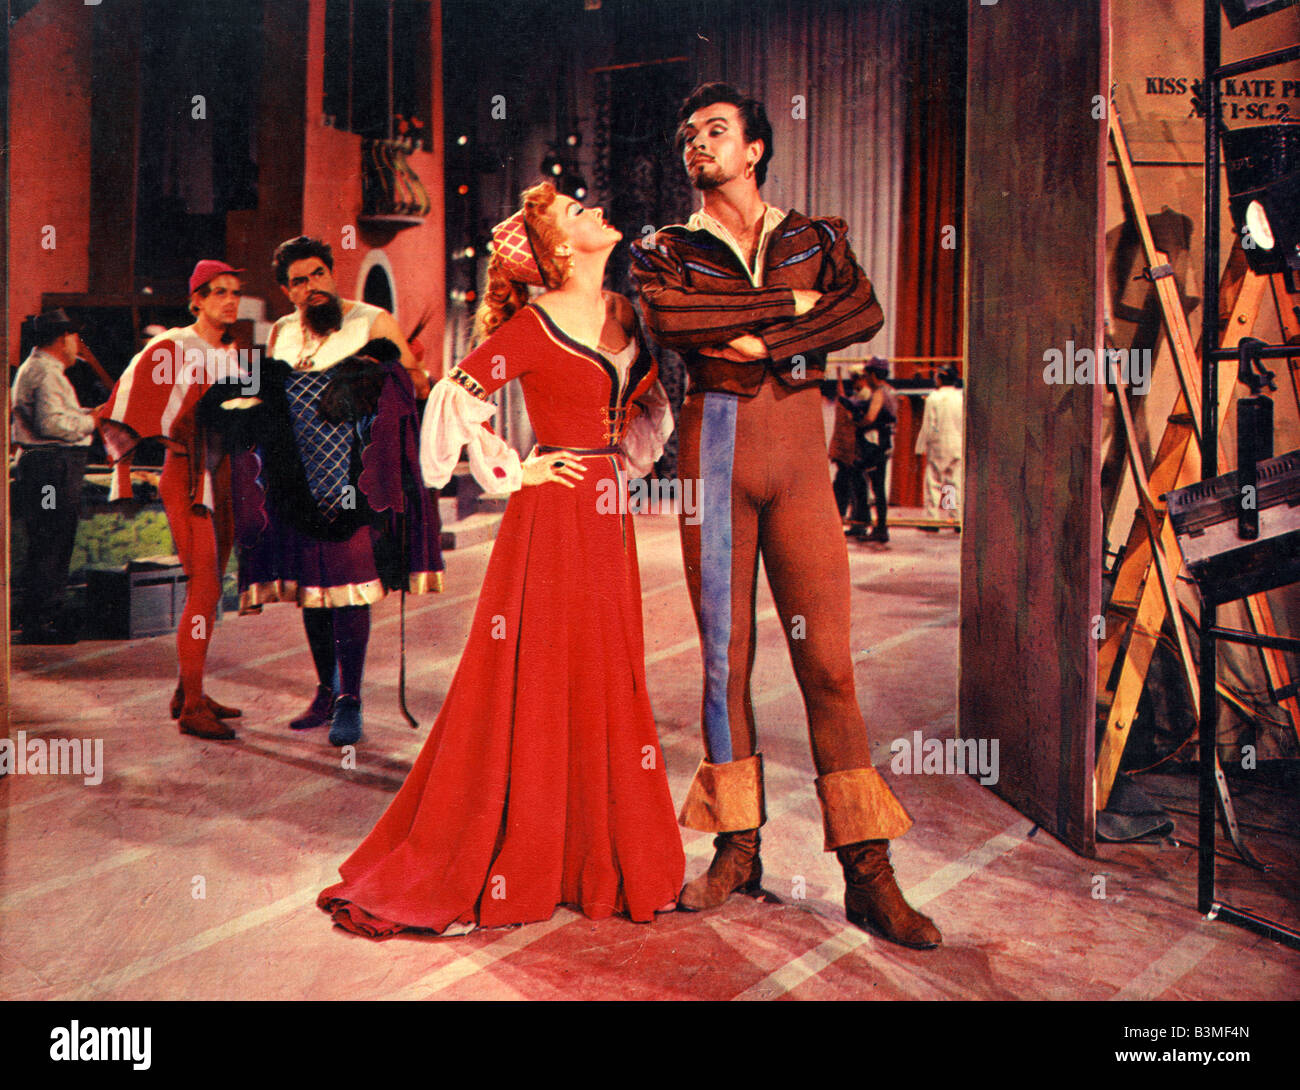 KISS ME KATE 1953 MGM film avec Howard Keel et Kathryn Grayson Banque D'Images